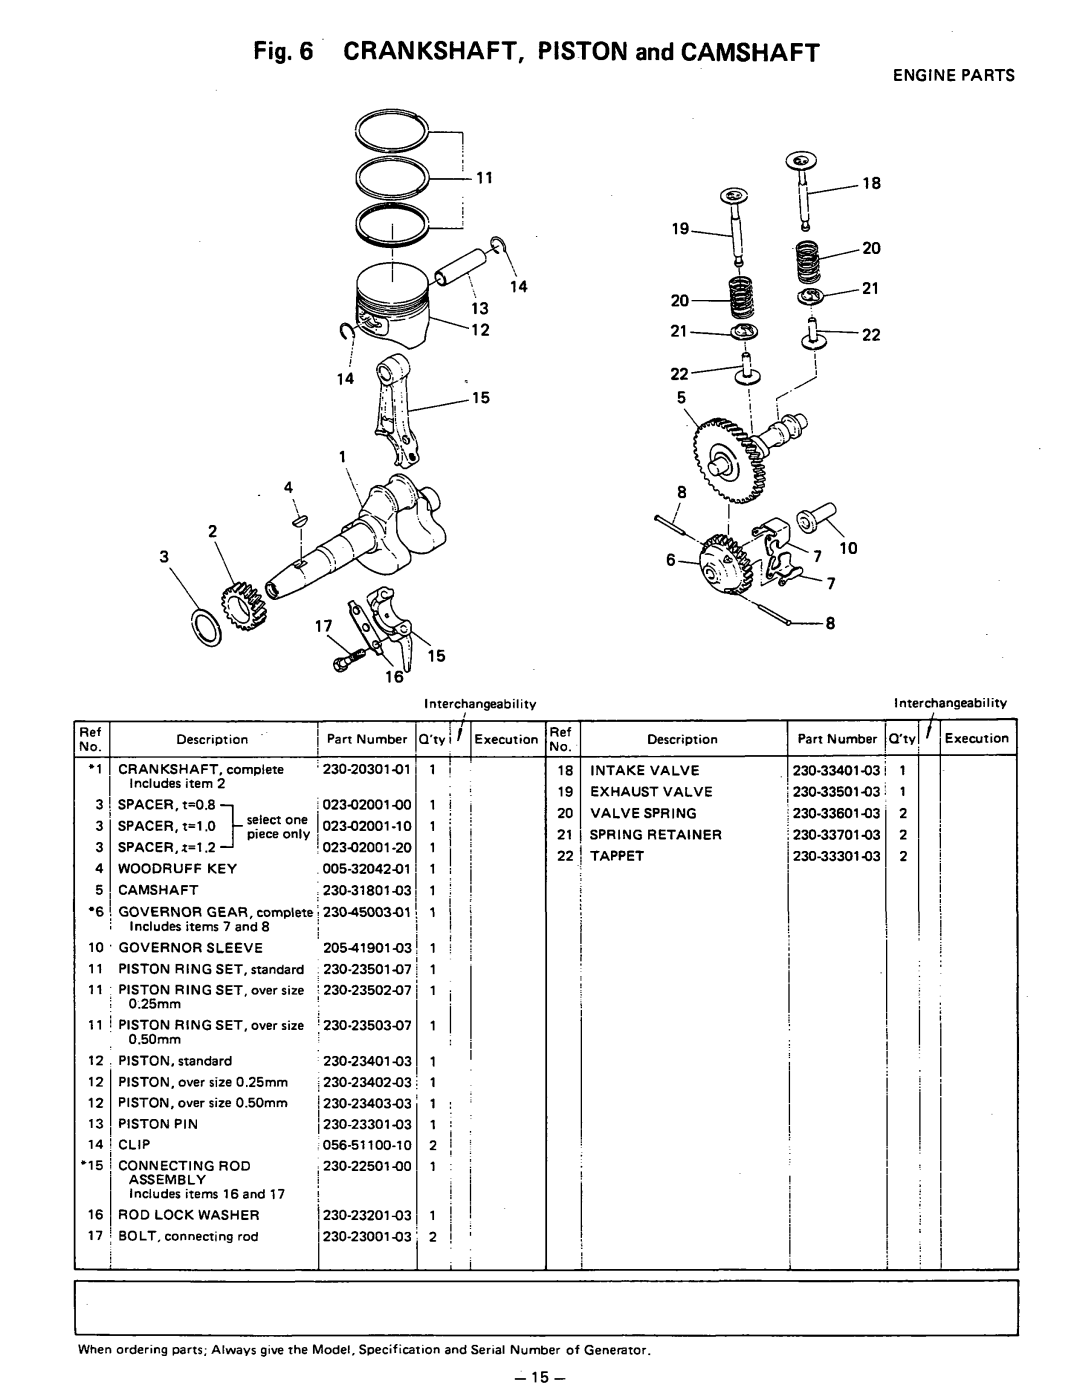 Subaru Robin Power Products R650 manual Fig, 6 . CRANKSHAFT,PISTON and CAMSHAFT, Engine Parts 